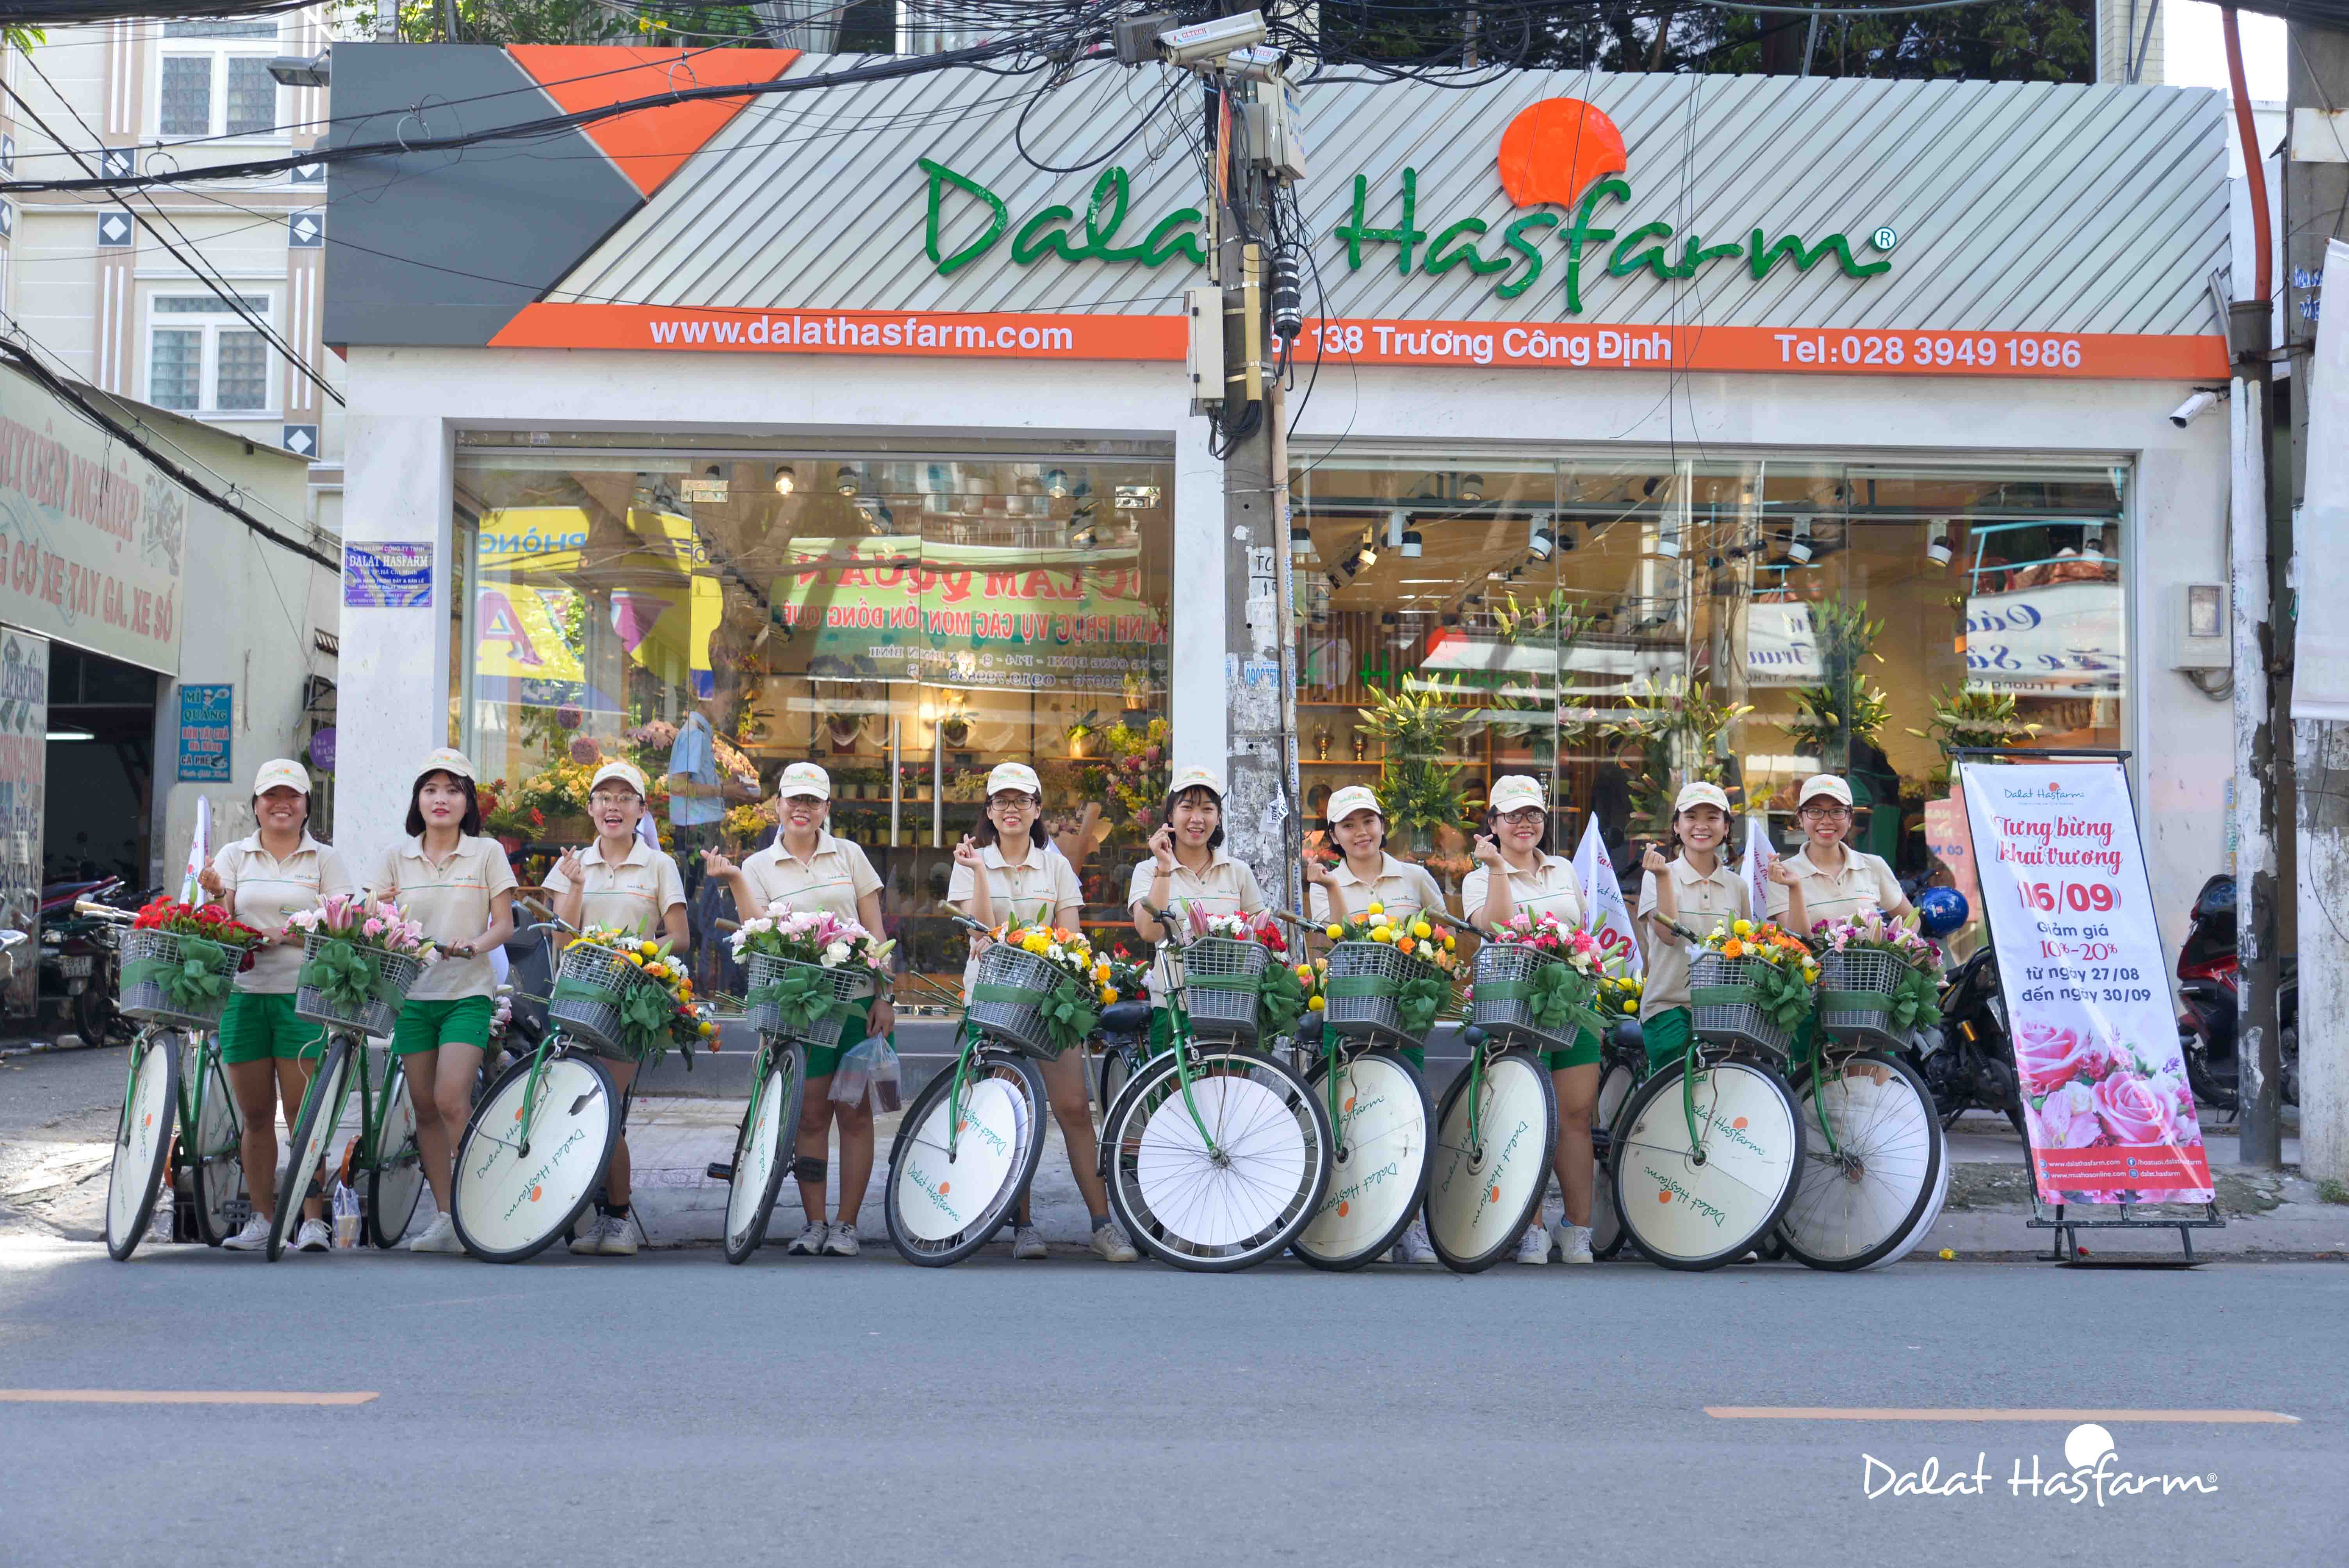 DALAT HASFARM TO OPEN A NEW FLOWER SHOP IN TAN BINH DISTRICT, HCMC.